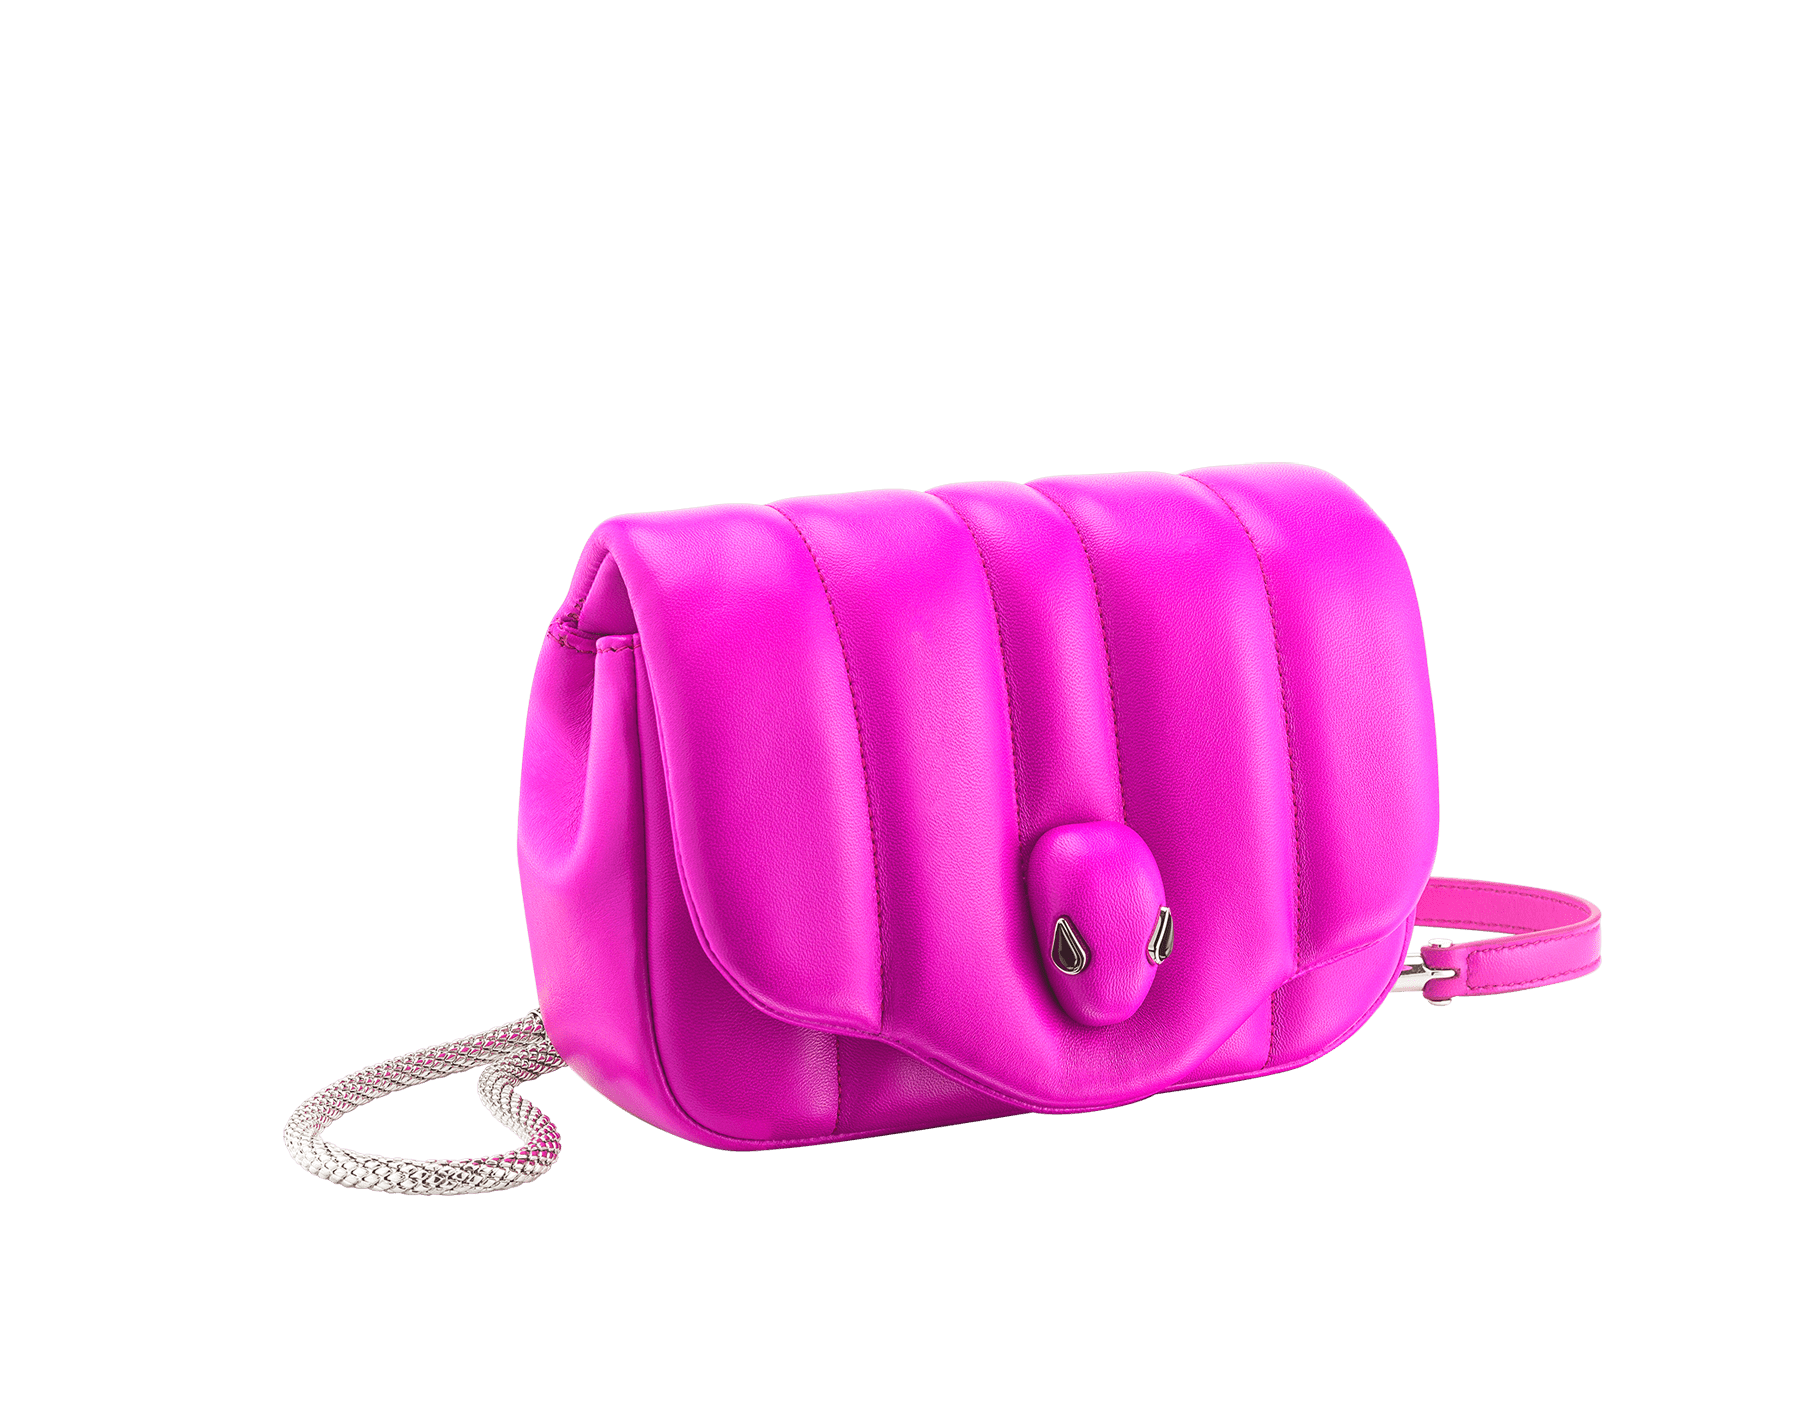 bvlgari purple bag